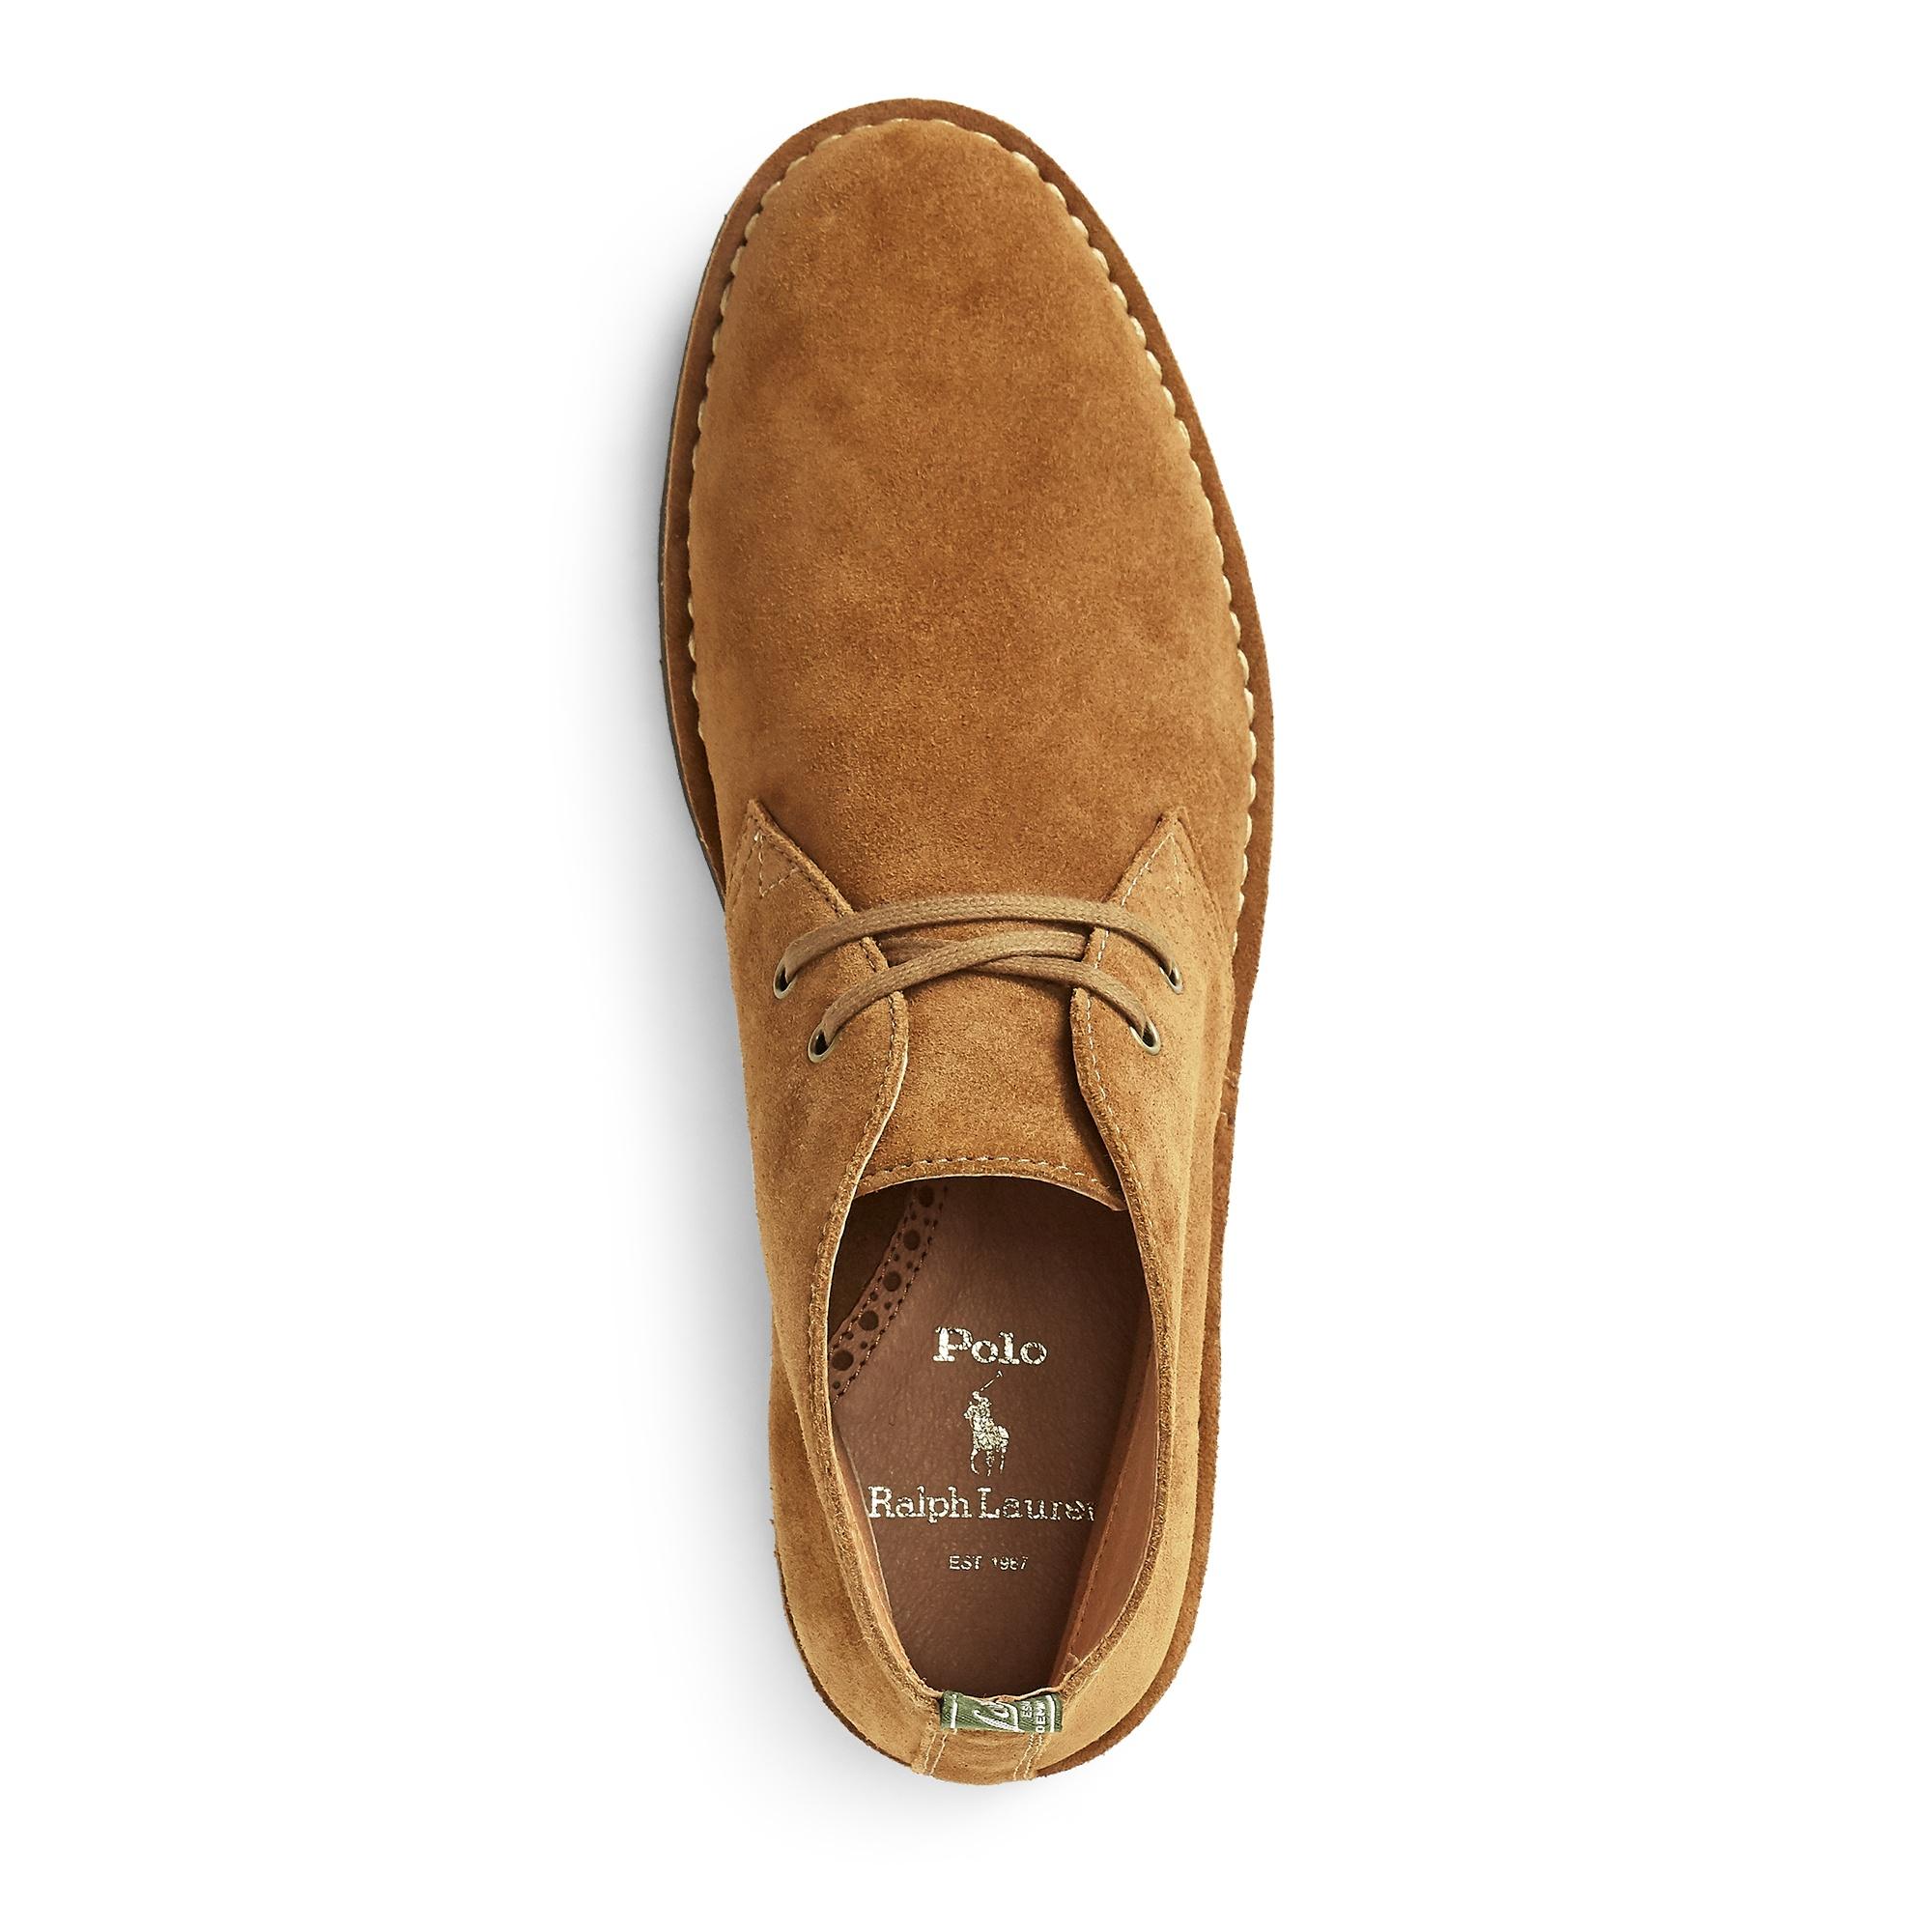 Ralph Lauren Polo Talan Suede Chukka Boots in Desert Tan (Brown) for Men -  Lyst